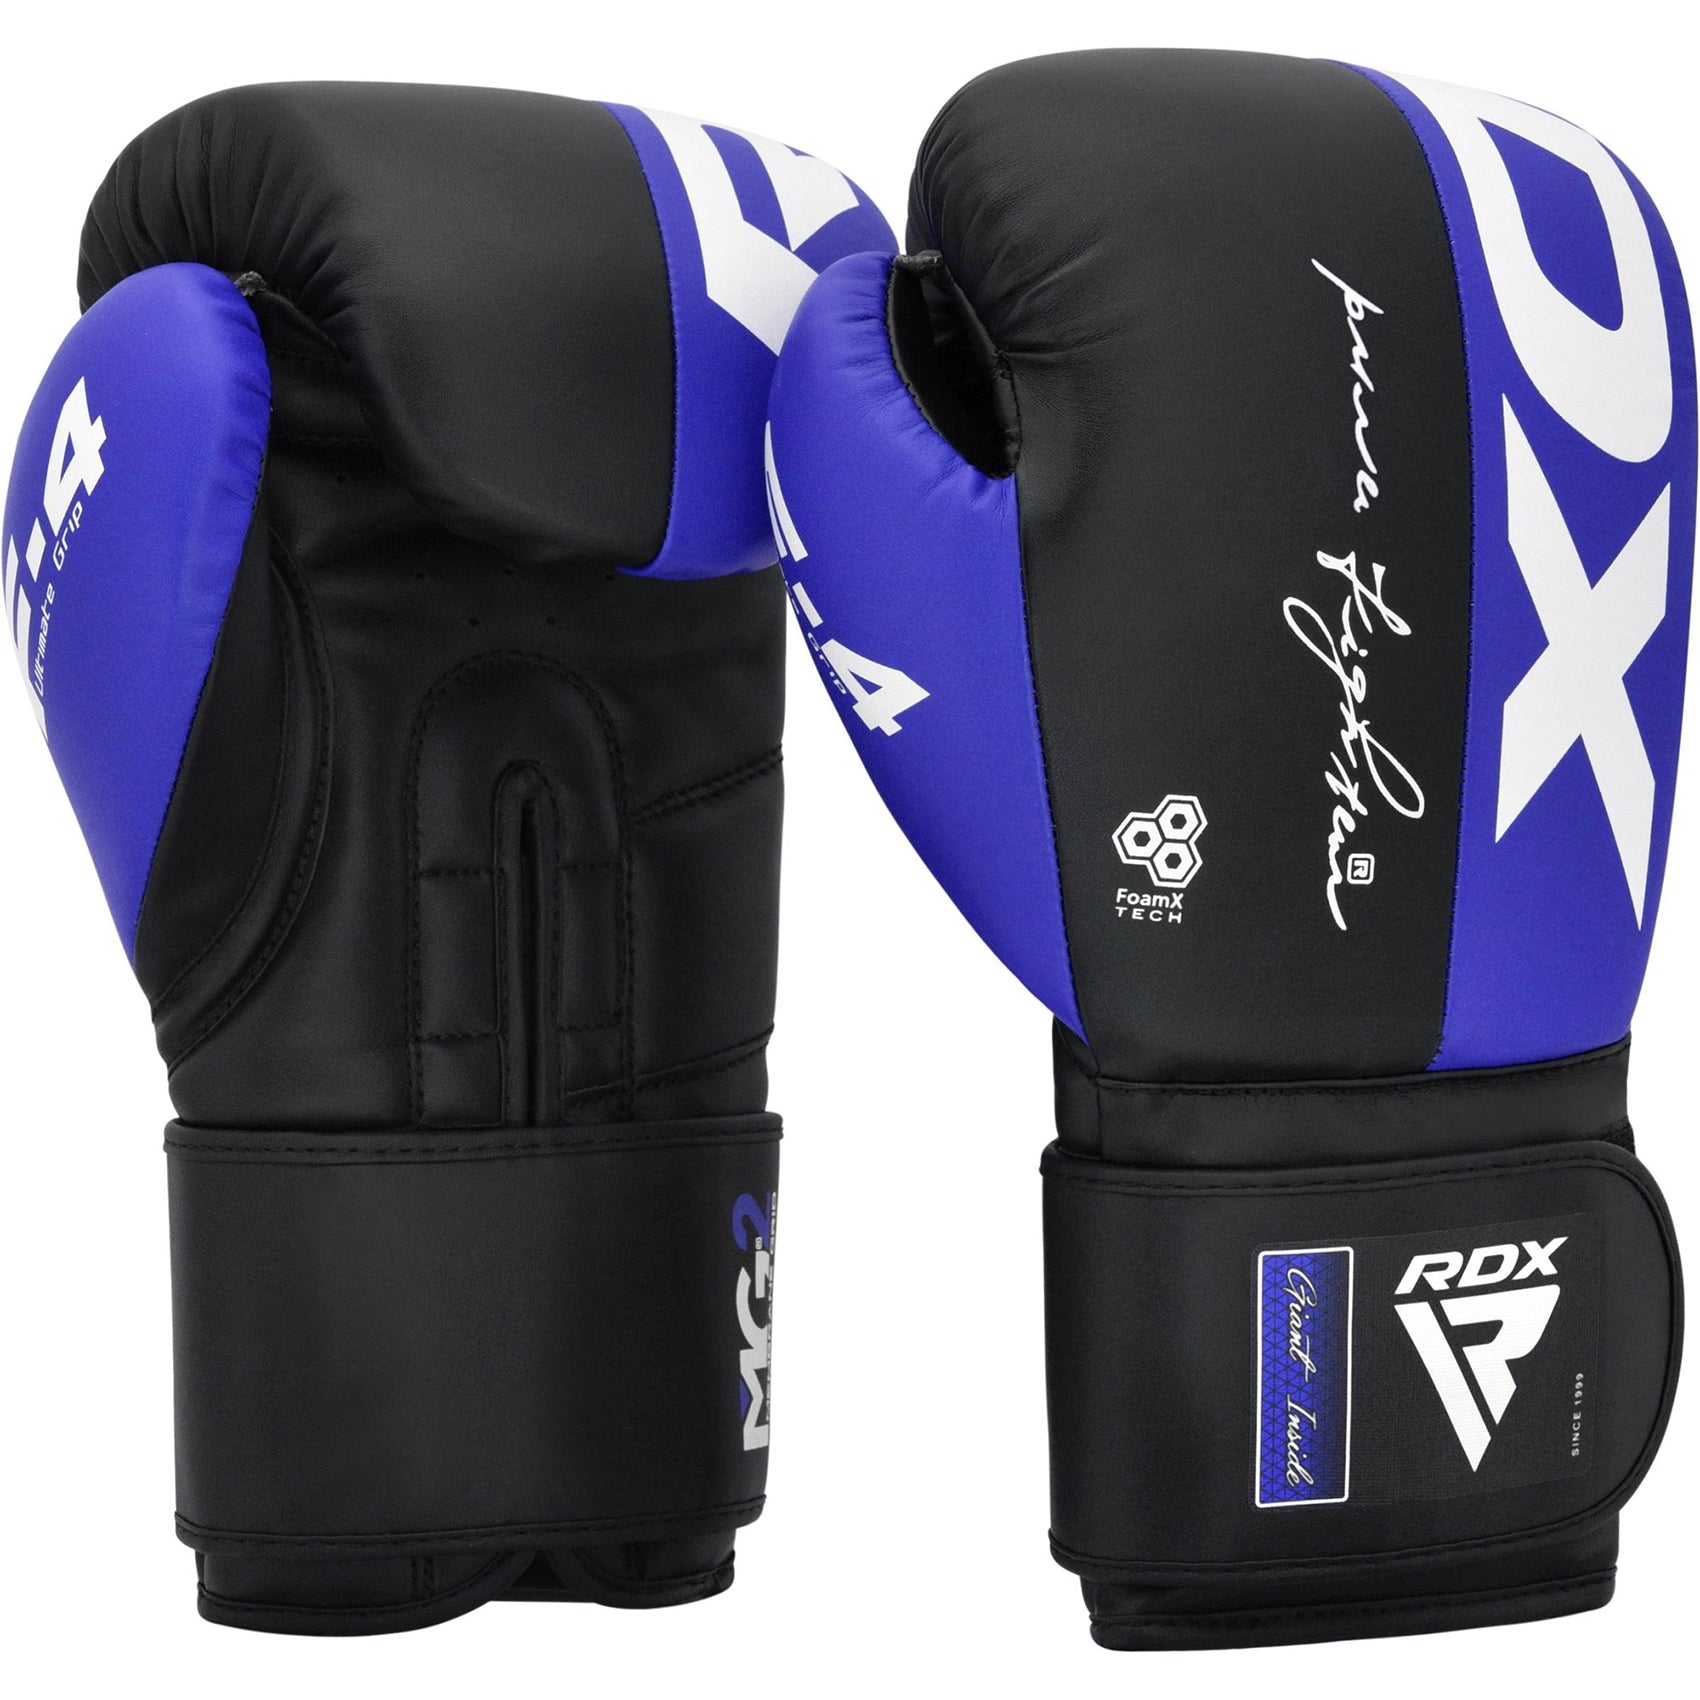 RDX REX F4 MMA, BJJ, Muay Thai, Kickboxing, Training Boxing Gloves - BLUE/BLACK - 10oz - Pro-Distributing